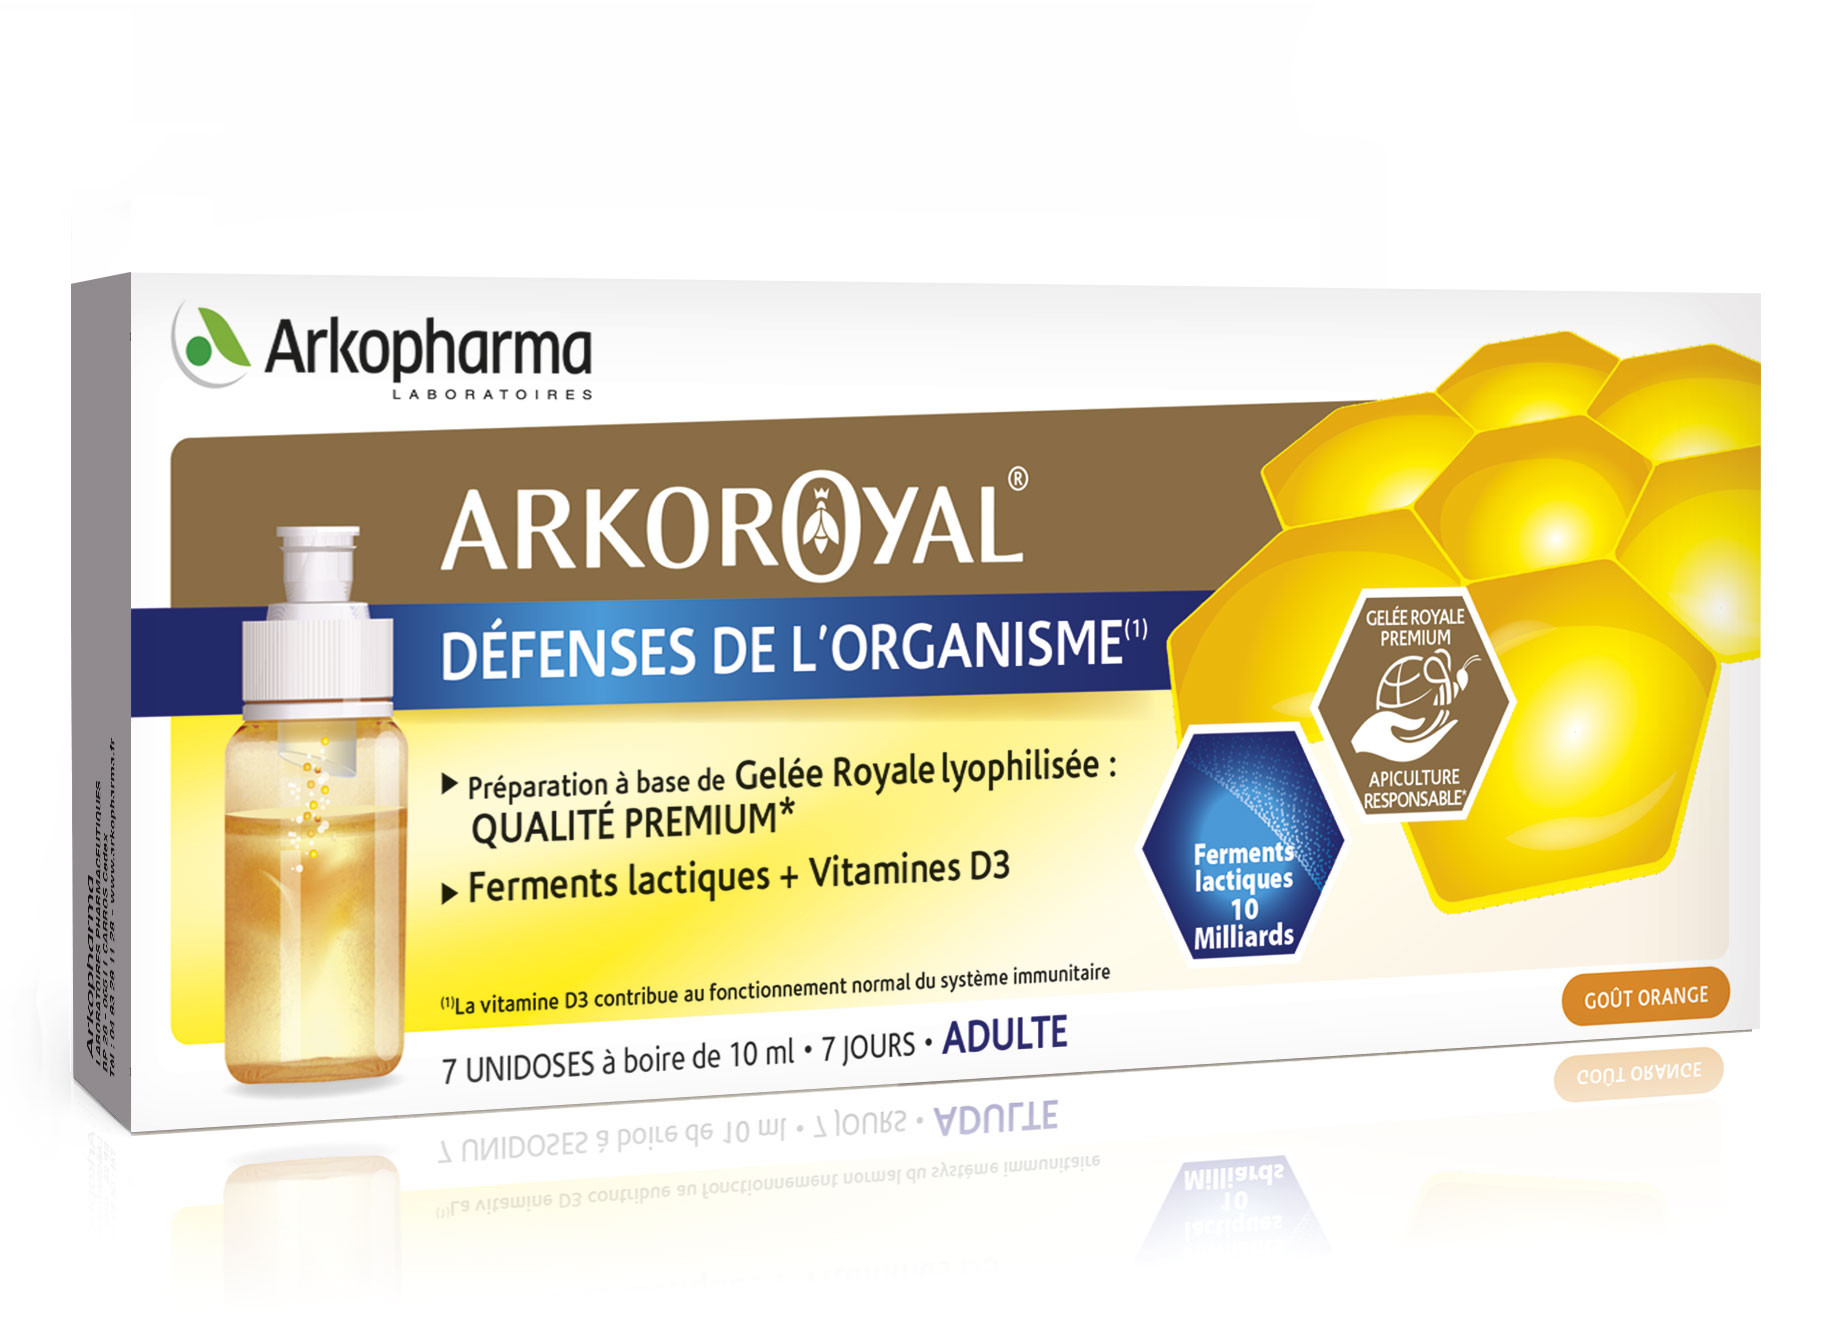 ARKOROYAL Défenses de l'Organisme Royal Jelly - 7 single doses